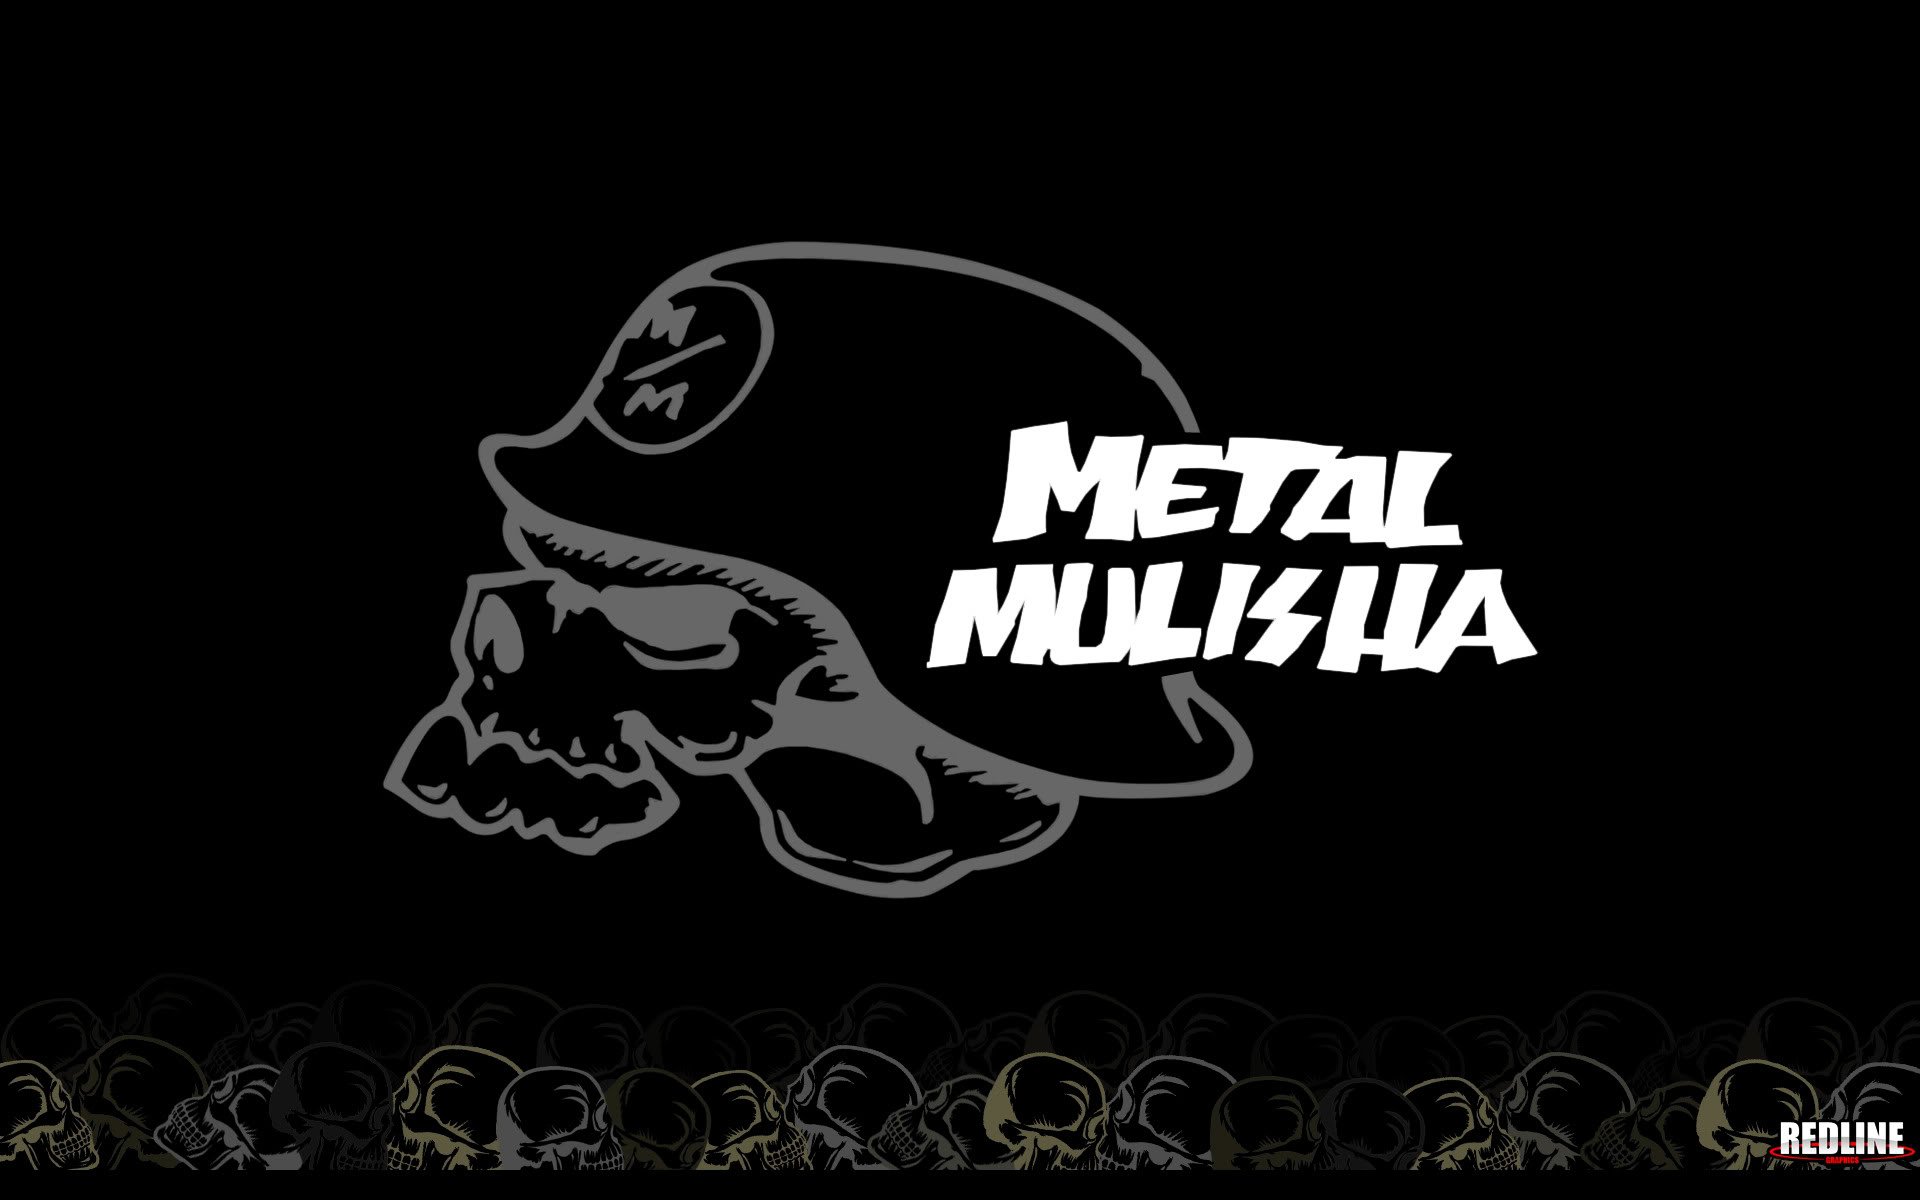 Metal mulisha logo wallpaper 1920x1200